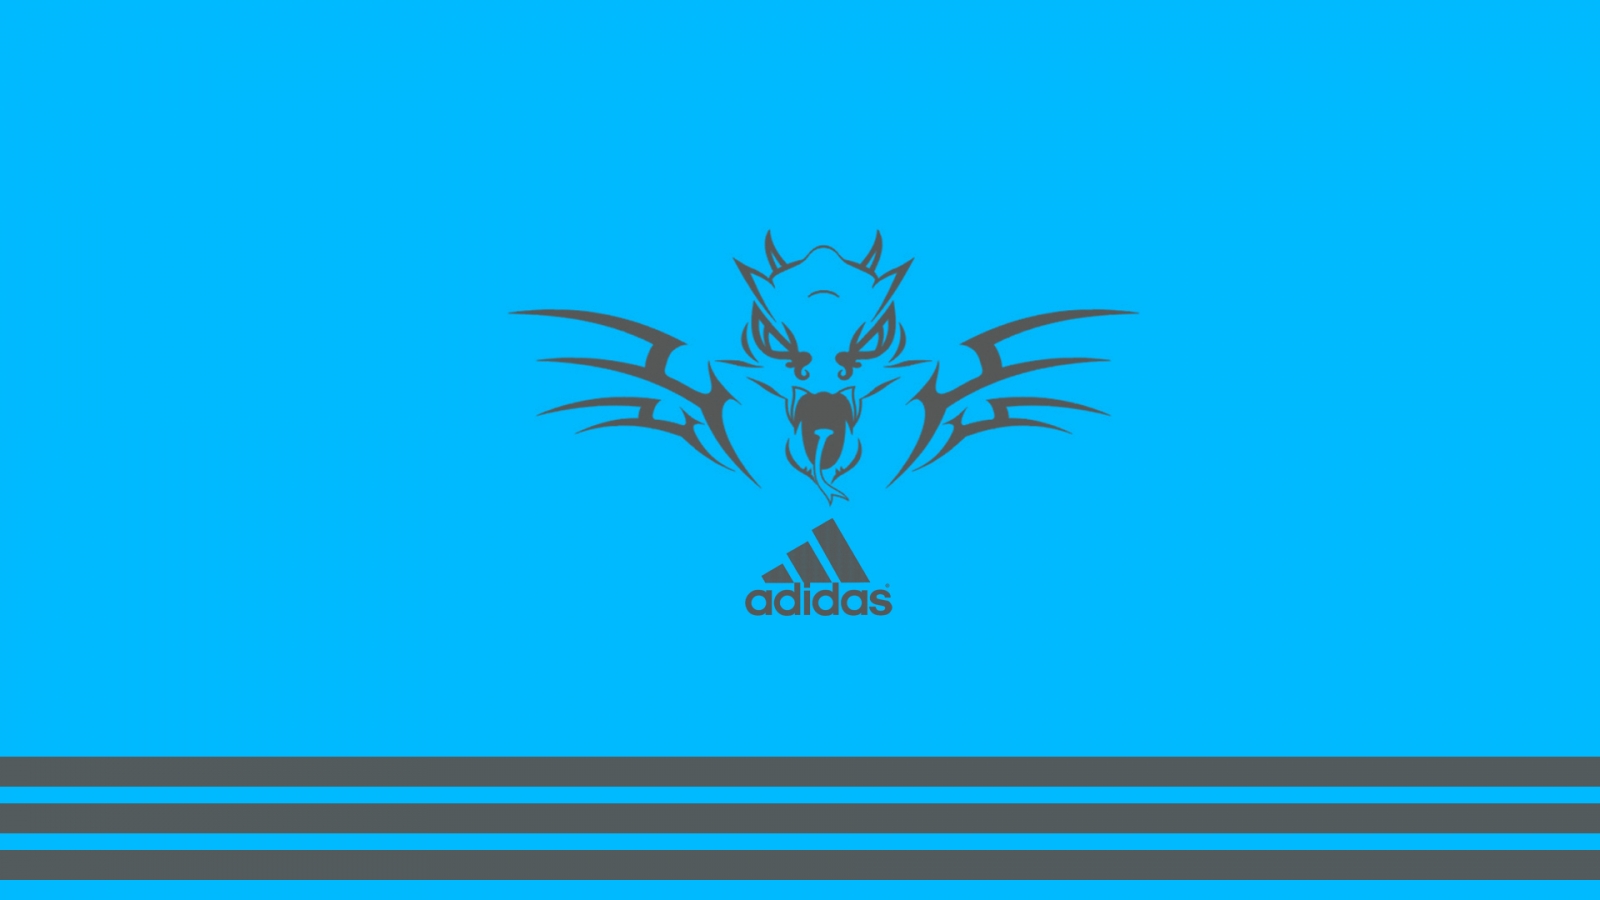 Adidas Fantasy Logo for 1600 x 900 HDTV resolution